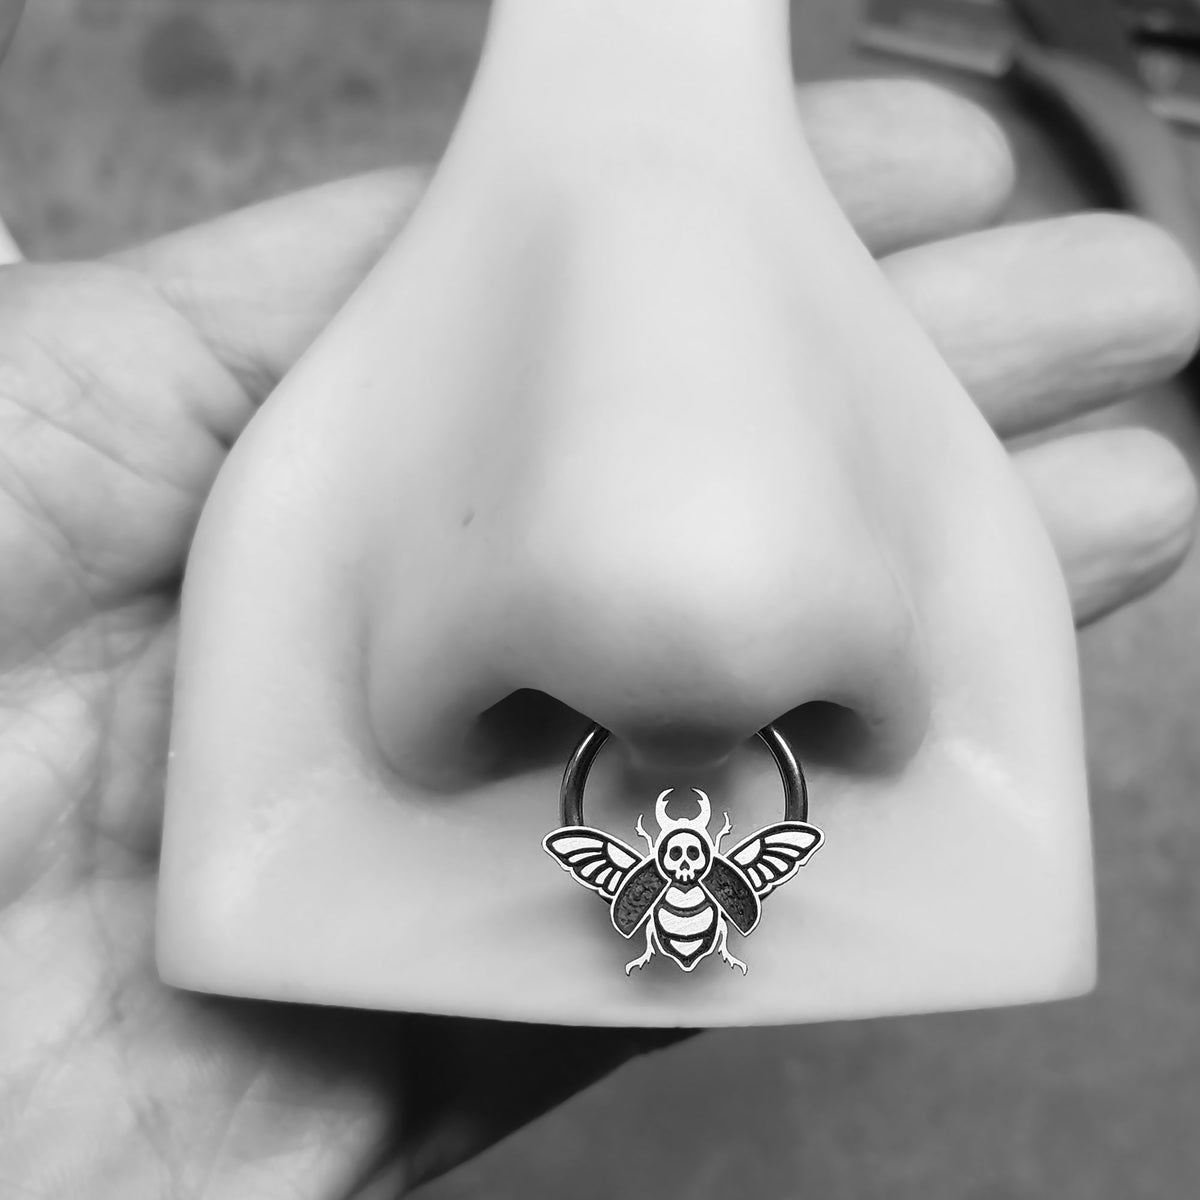 16G Skull Beetle Captive Bead Ring - Metal Lotus